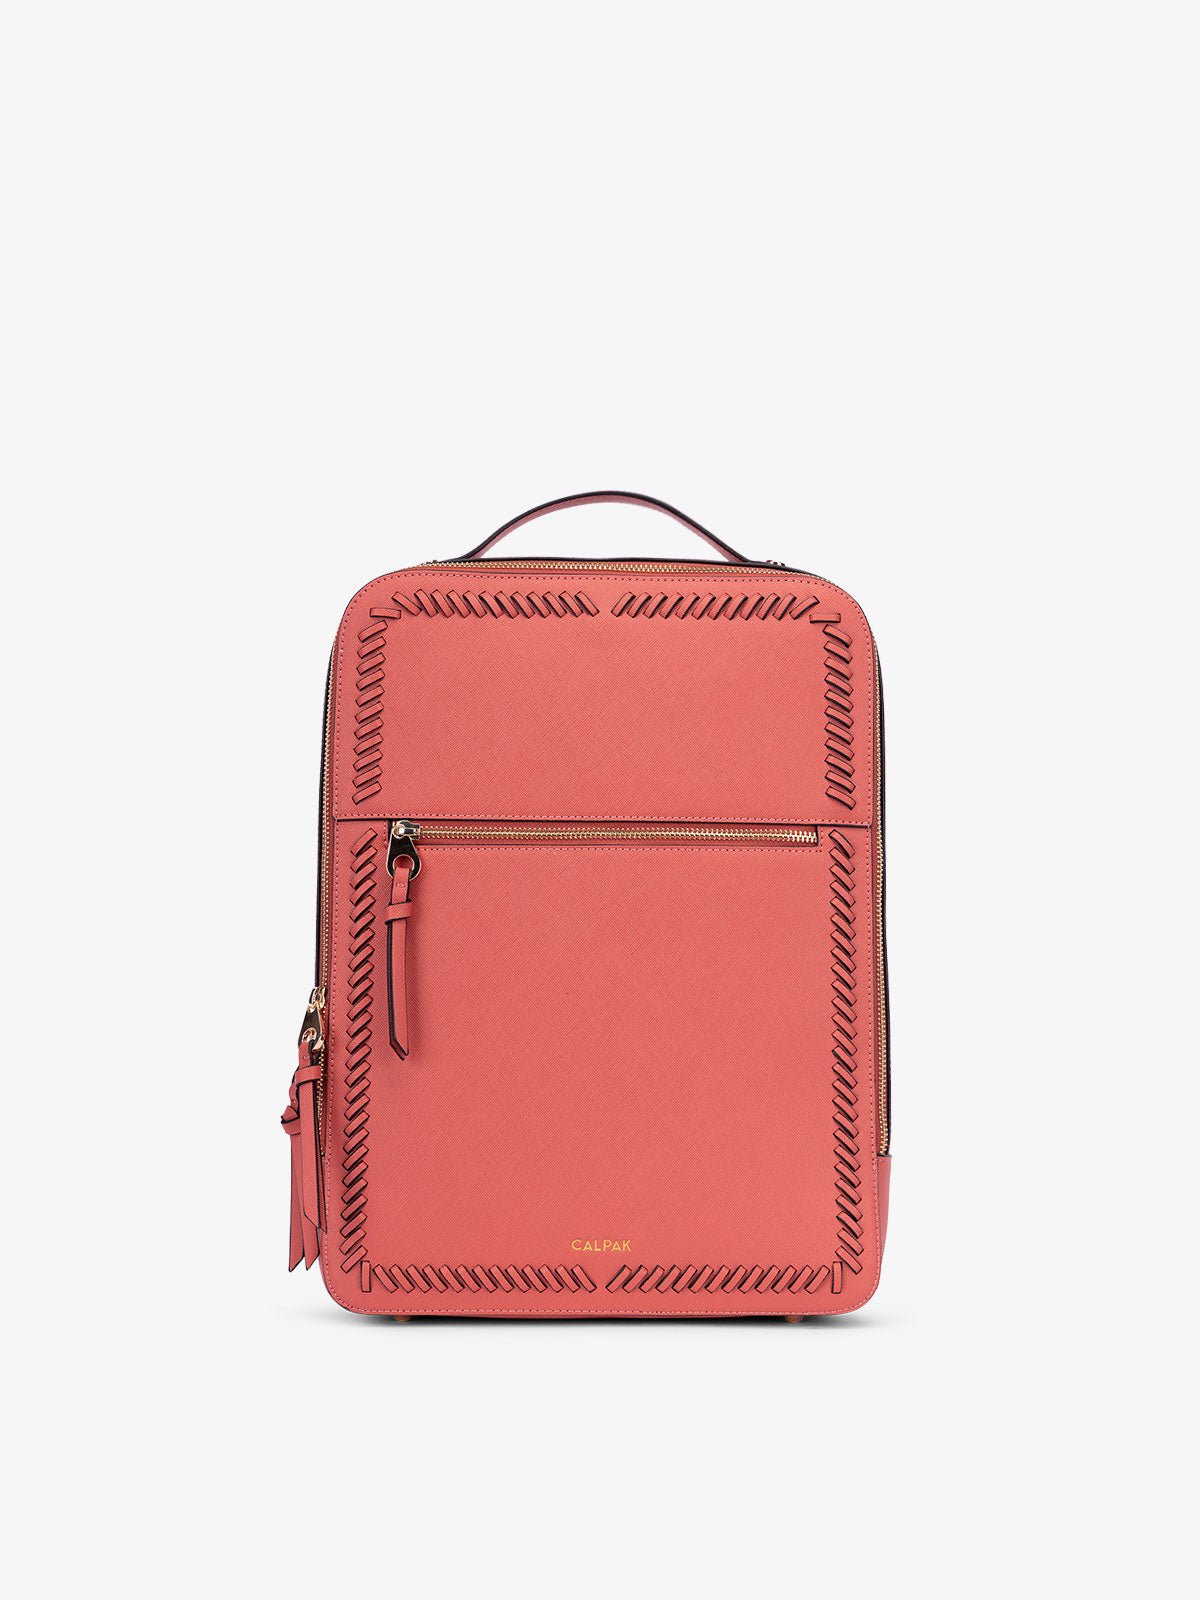 CALPAK Kaya Laptop Backpack for women in light red cranberry